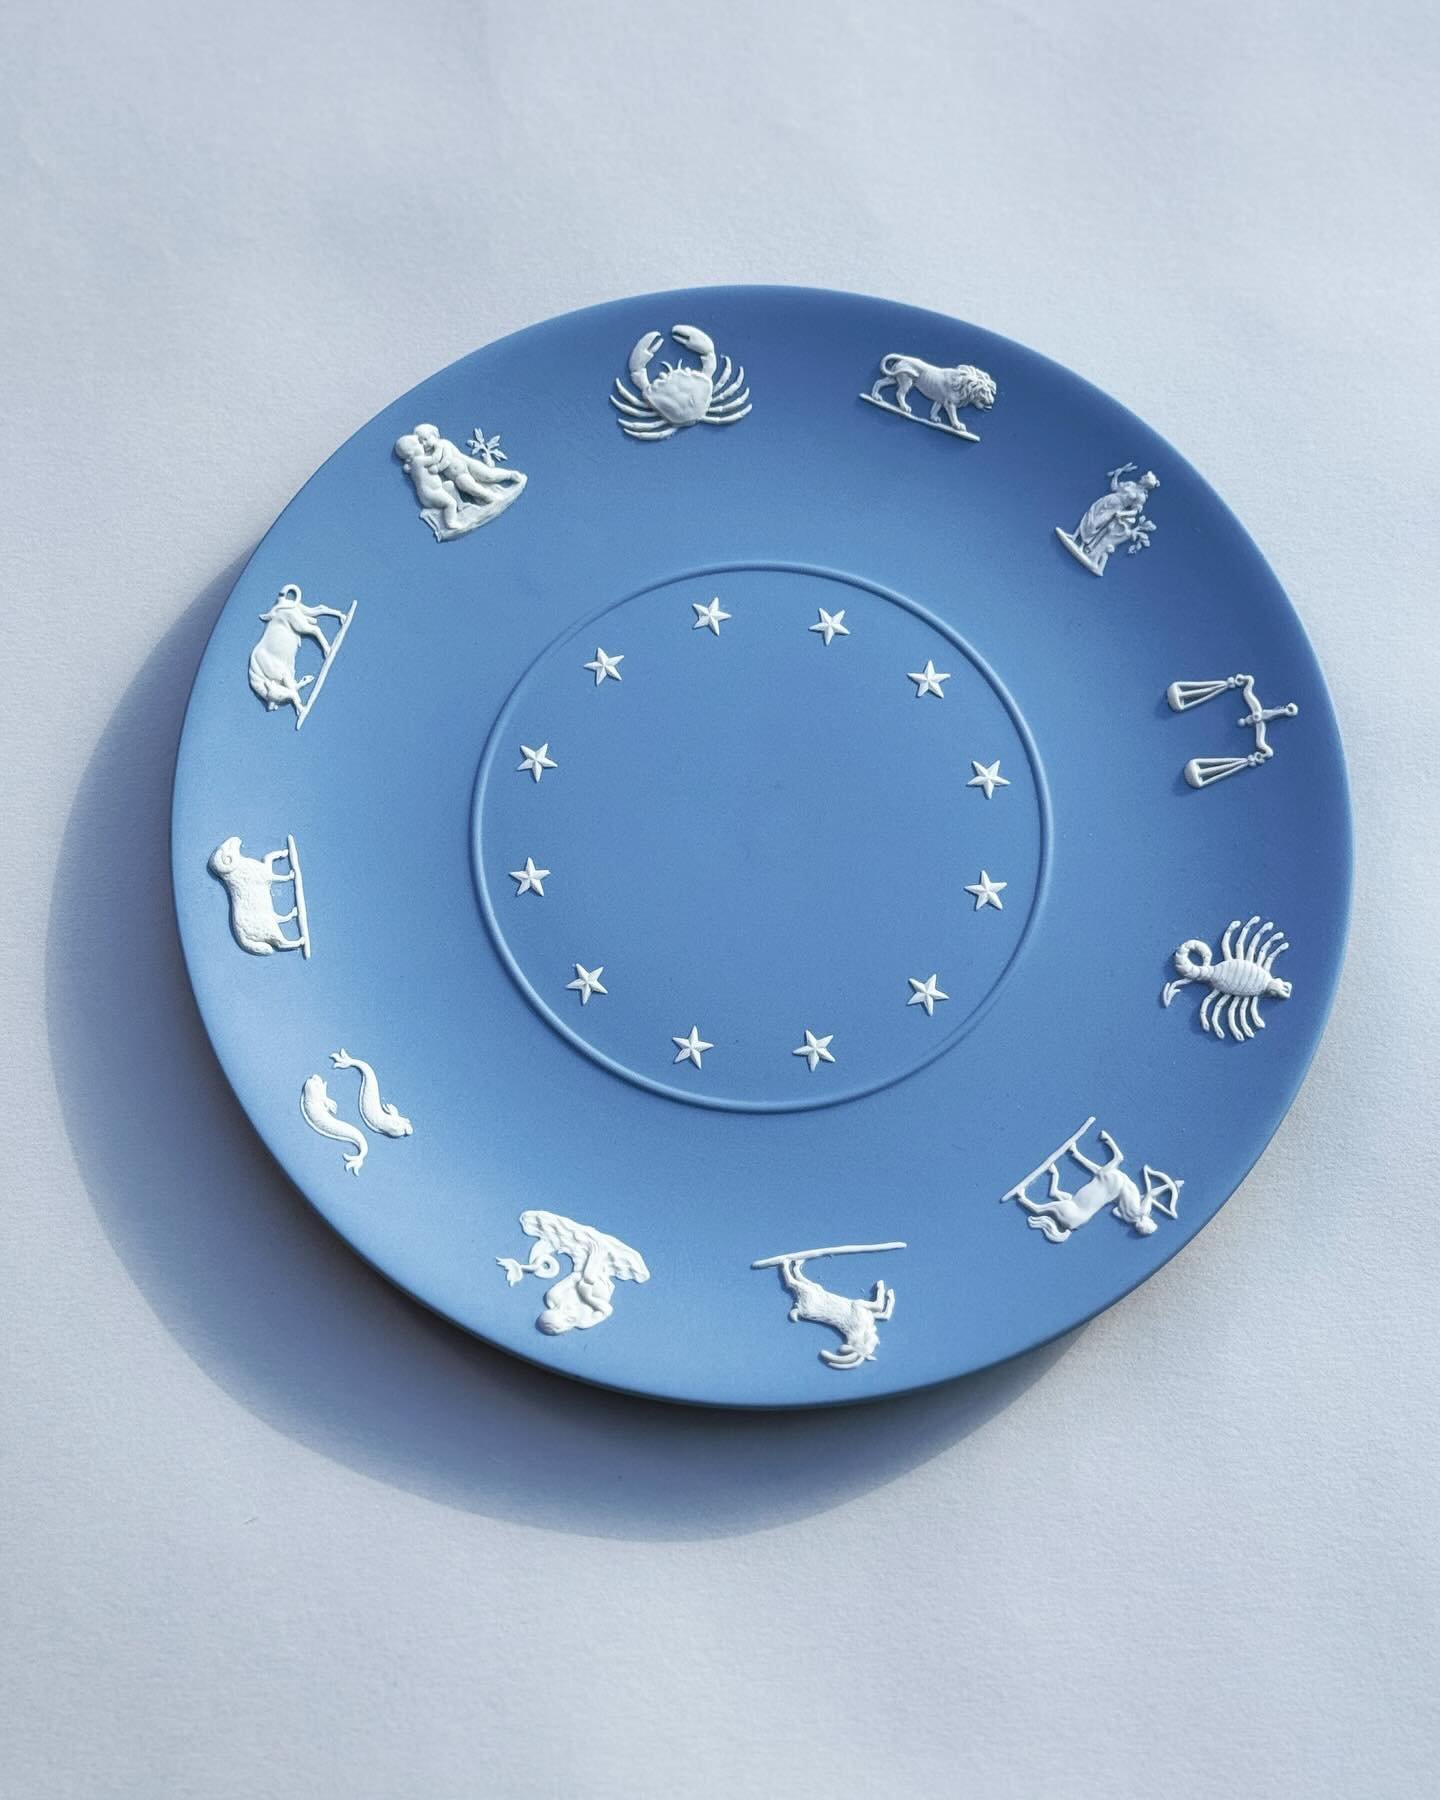 Wedgwood &bull; Jasperware Zodiac Plate &bull; 9&rdquo; wide &bull; SOLD
&bull;
&bull;
&bull;
&bull;
&bull;
#wedgwood #ceramic #zodiac #sign #birthchart #dish #porcelain #jasperware decor #design #interiordesign #england #english #madeinengland #nyca